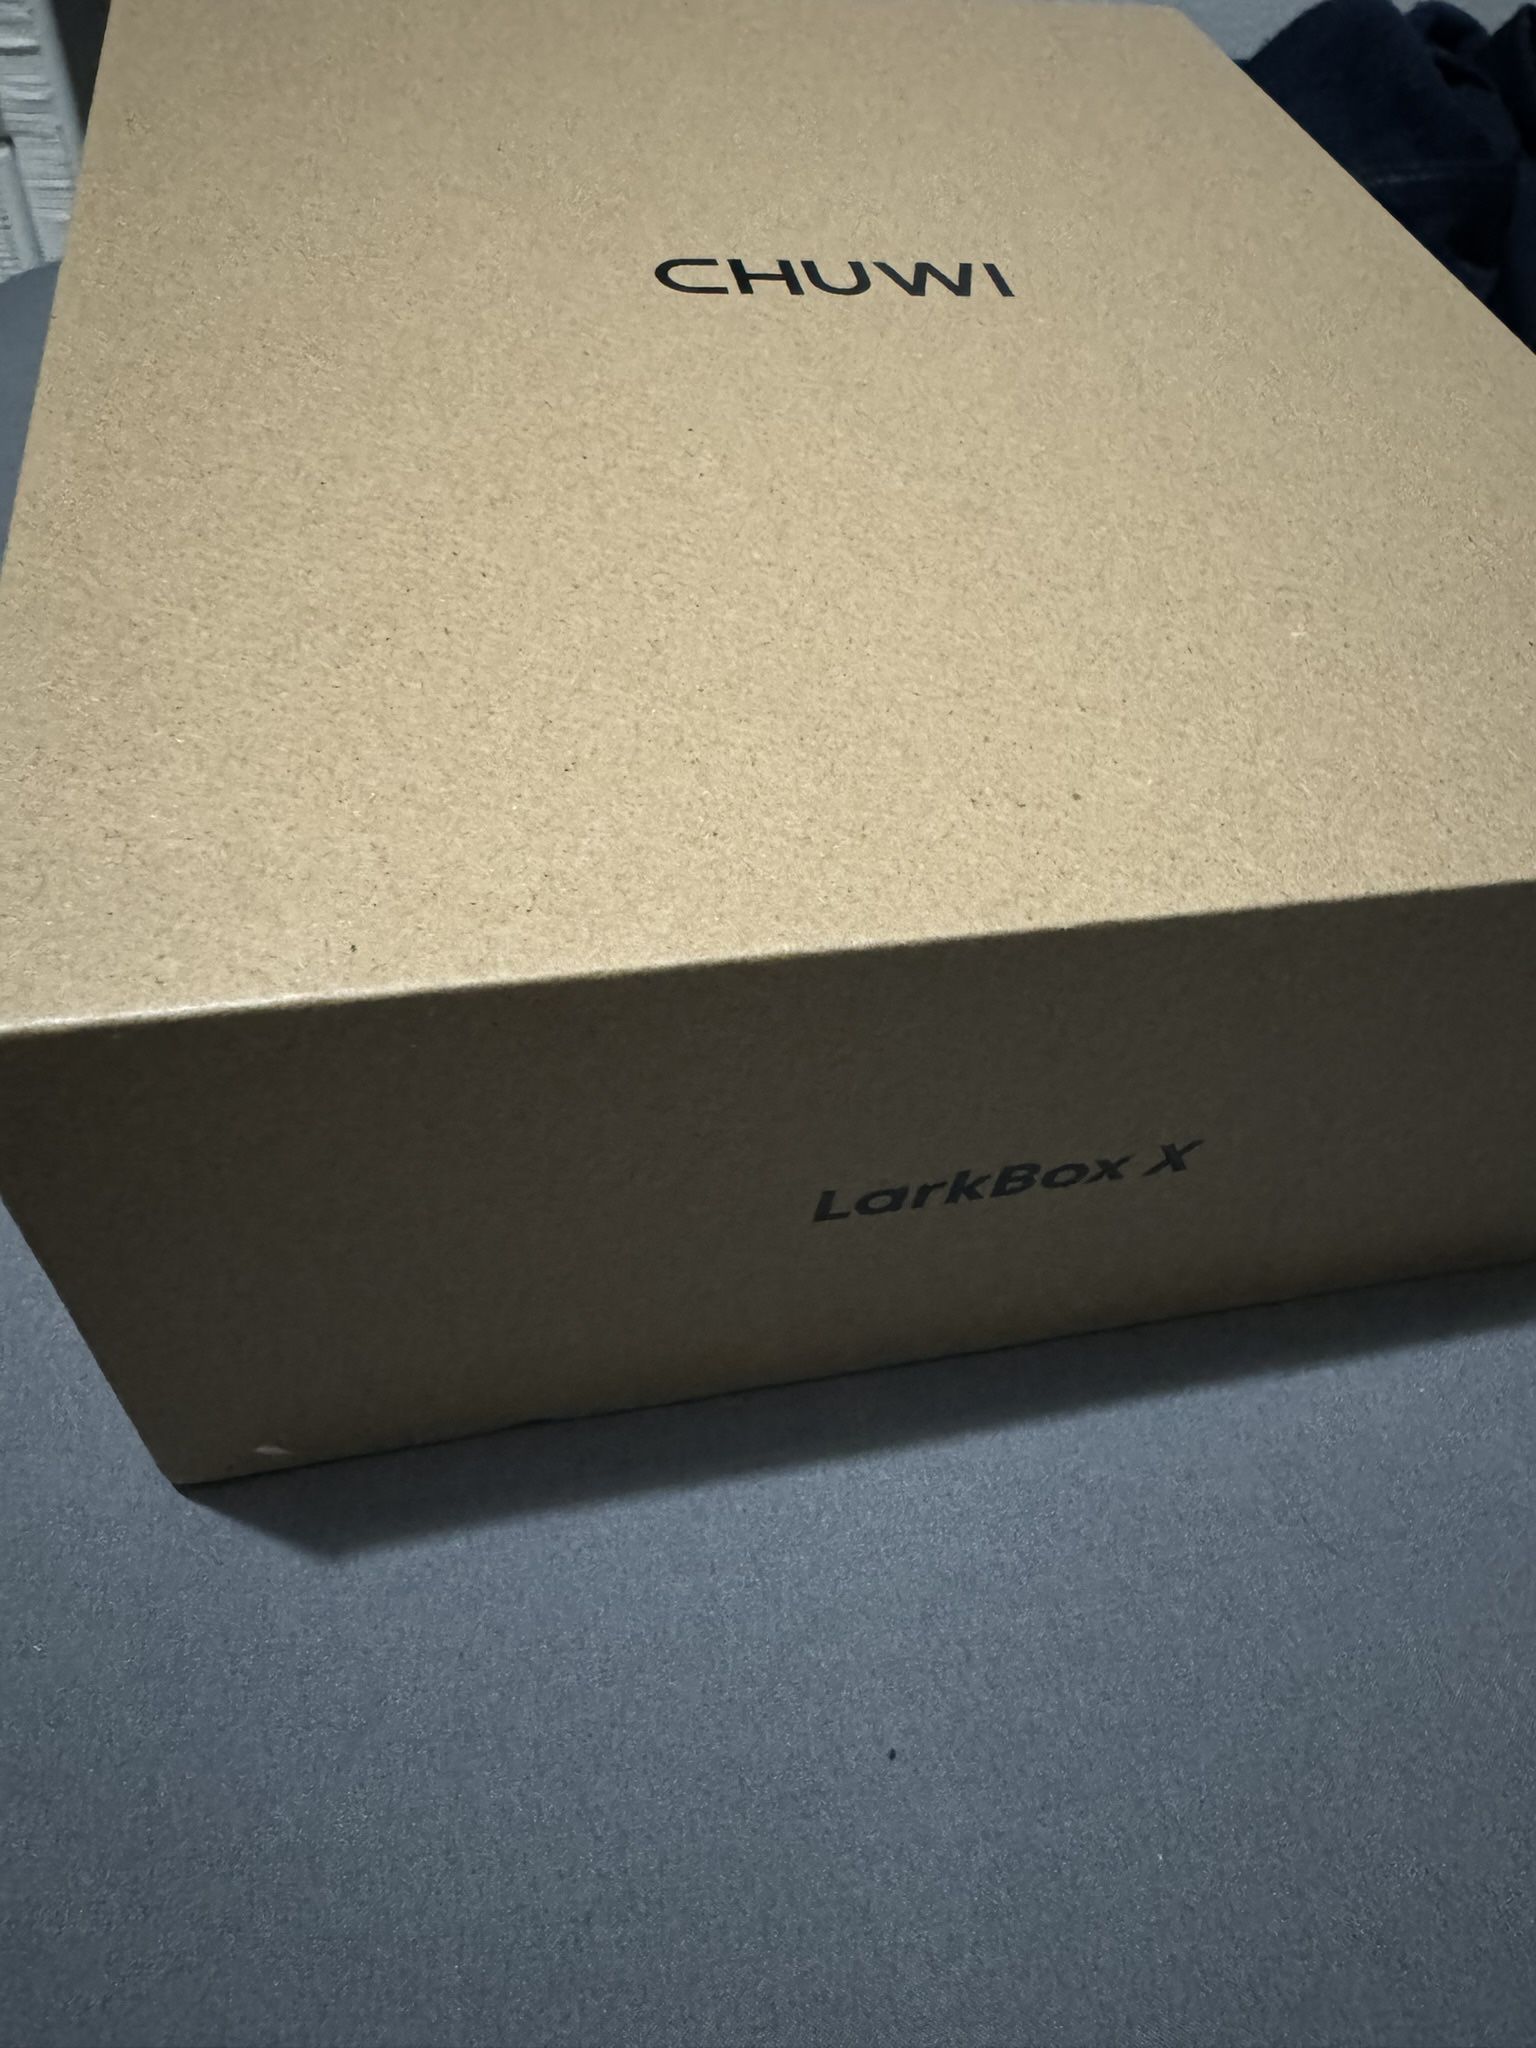 Miniature Desktop Computer ( Chuwi Lark box X )